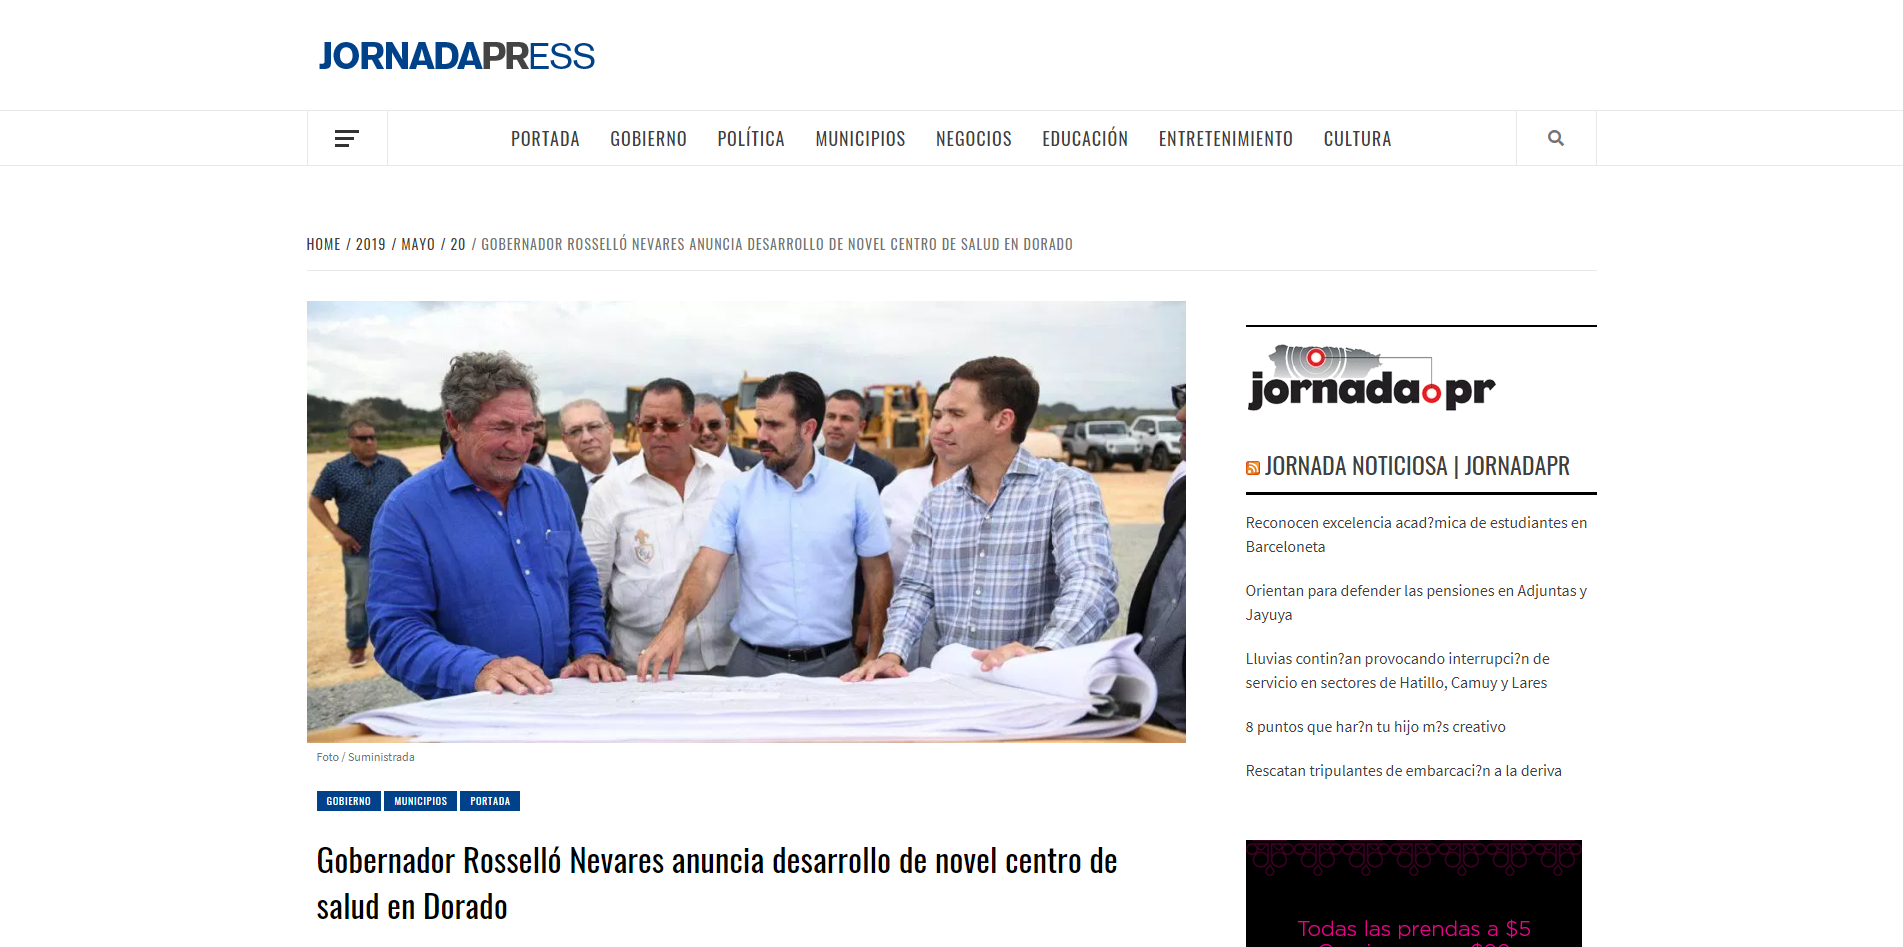  “Gobernador Rosselló Nevares anuncia desarrollo de novel centro de salud en Dorado”, Jornada Press, May 20, 2019, 